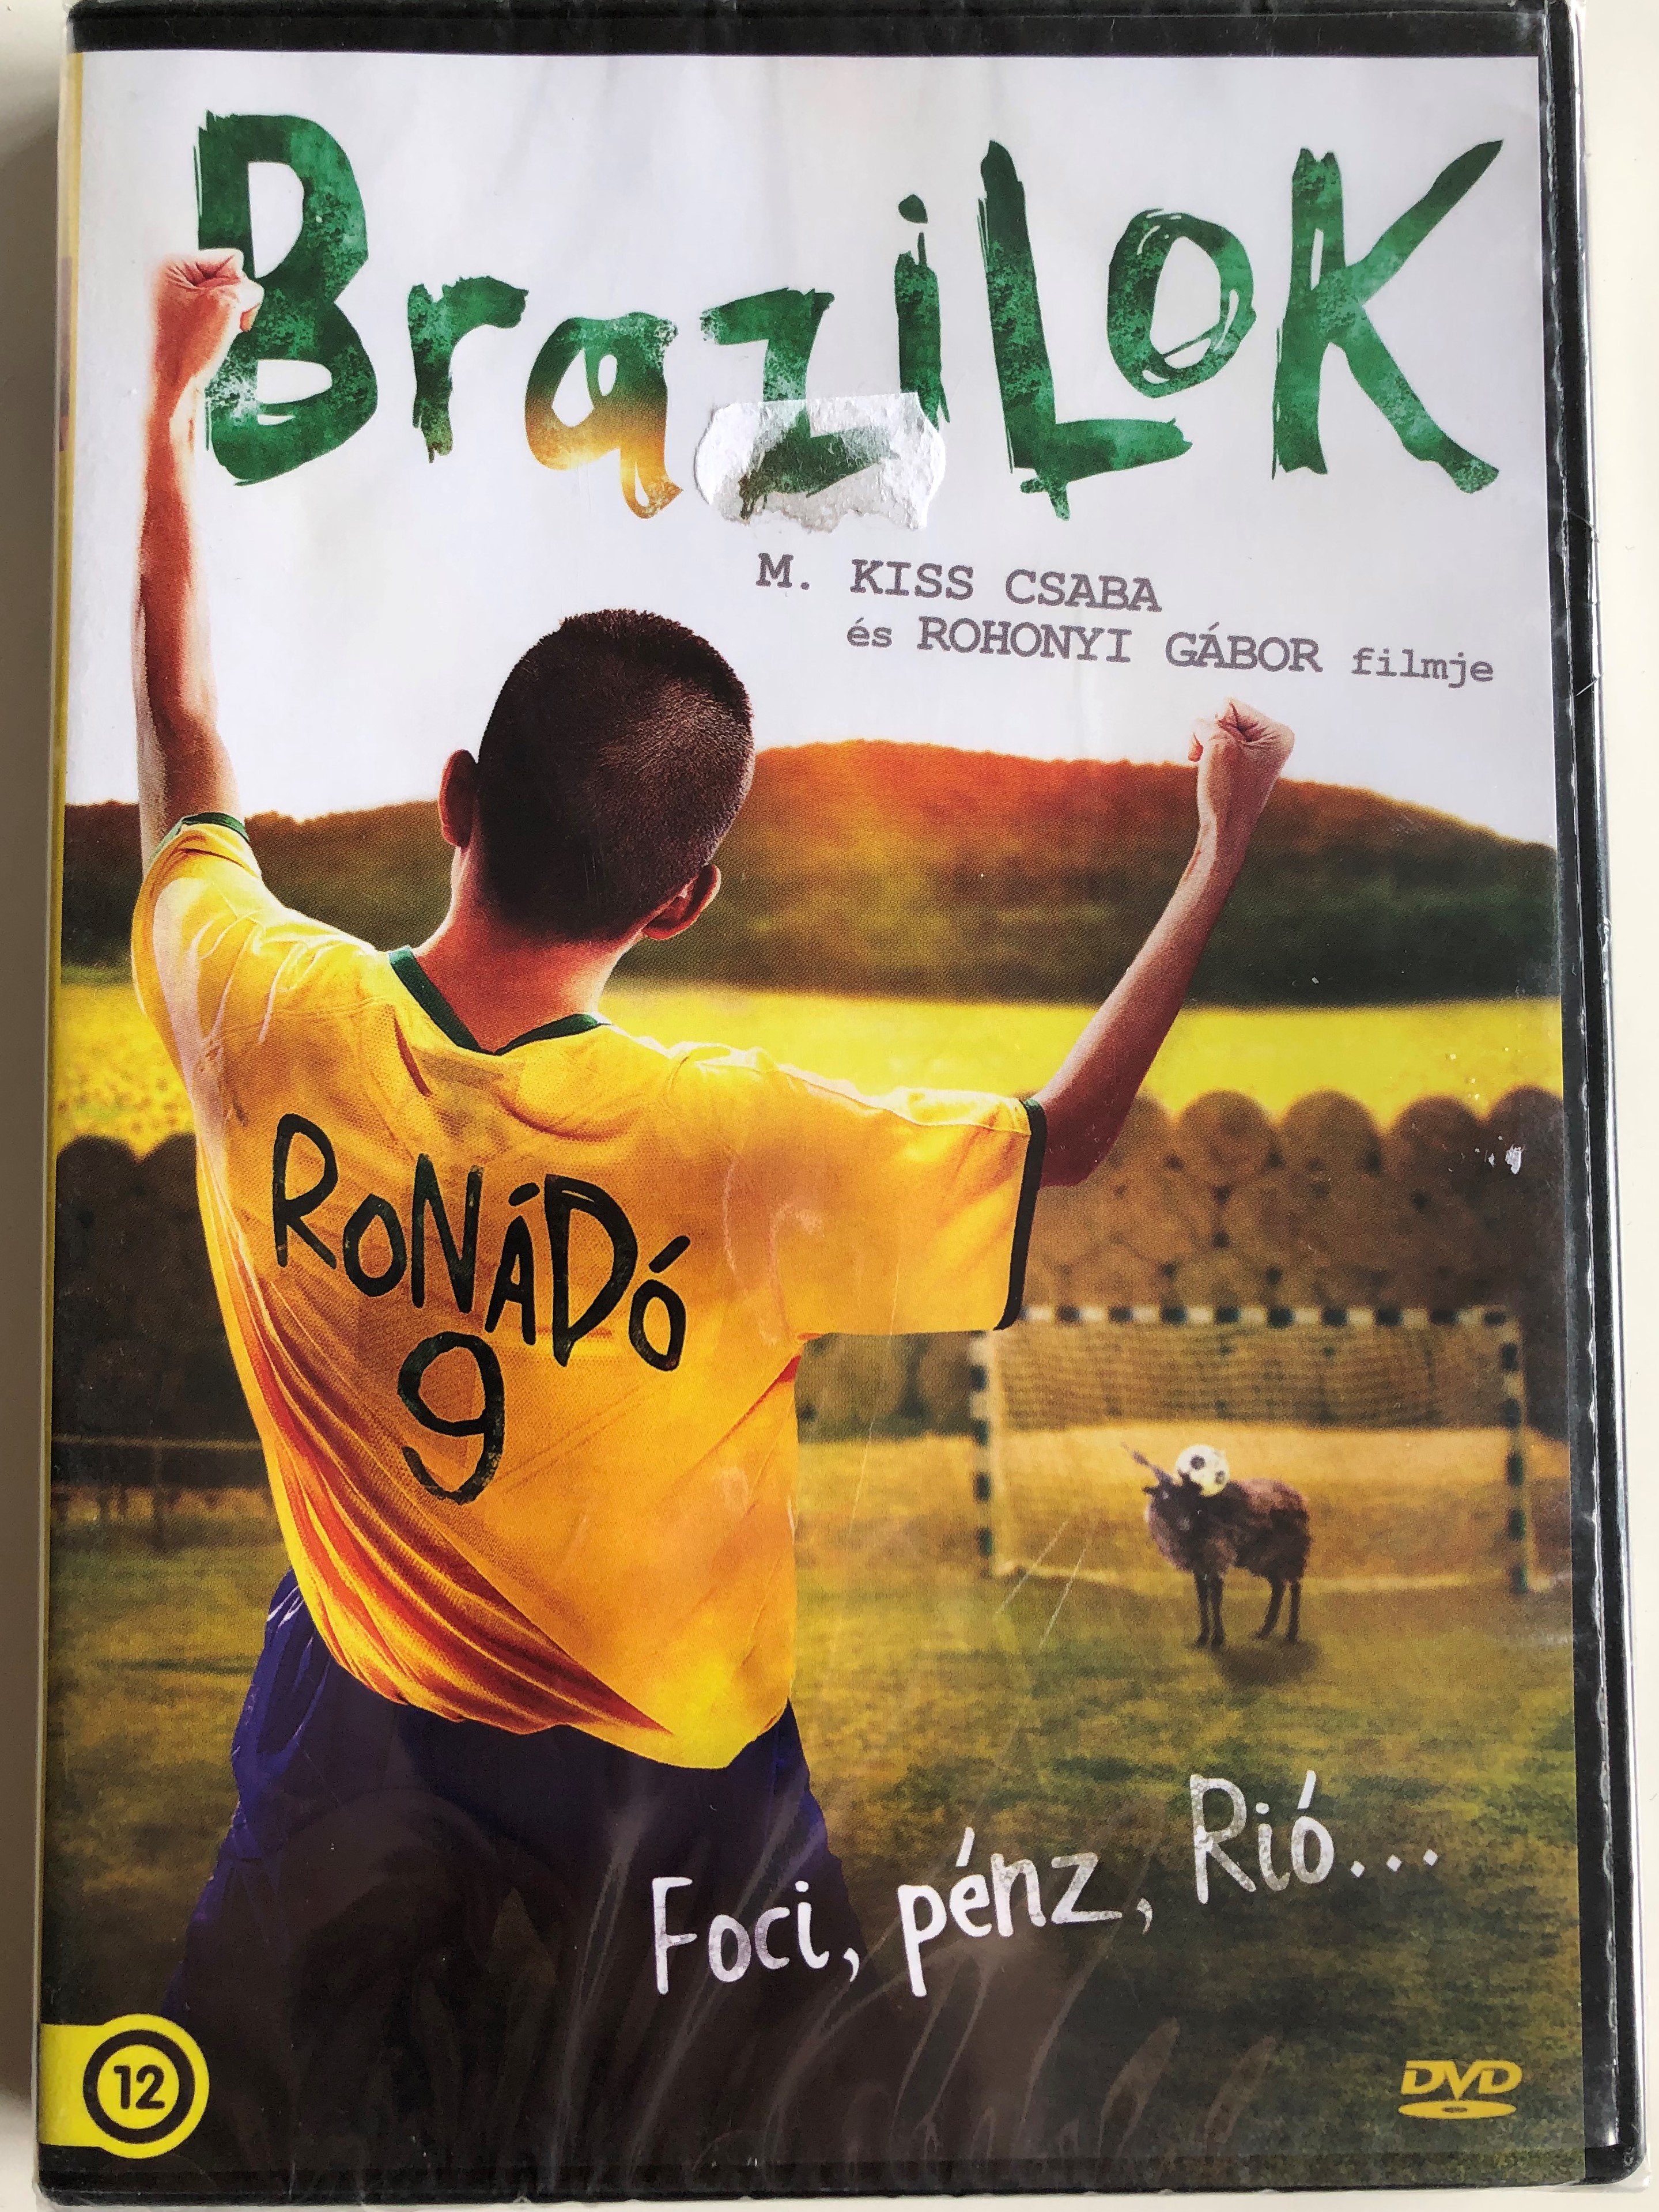 brazilok-dvd-2016-directed-by-rohonyi-g-bor-m.-kiss-csaba-01.jpg